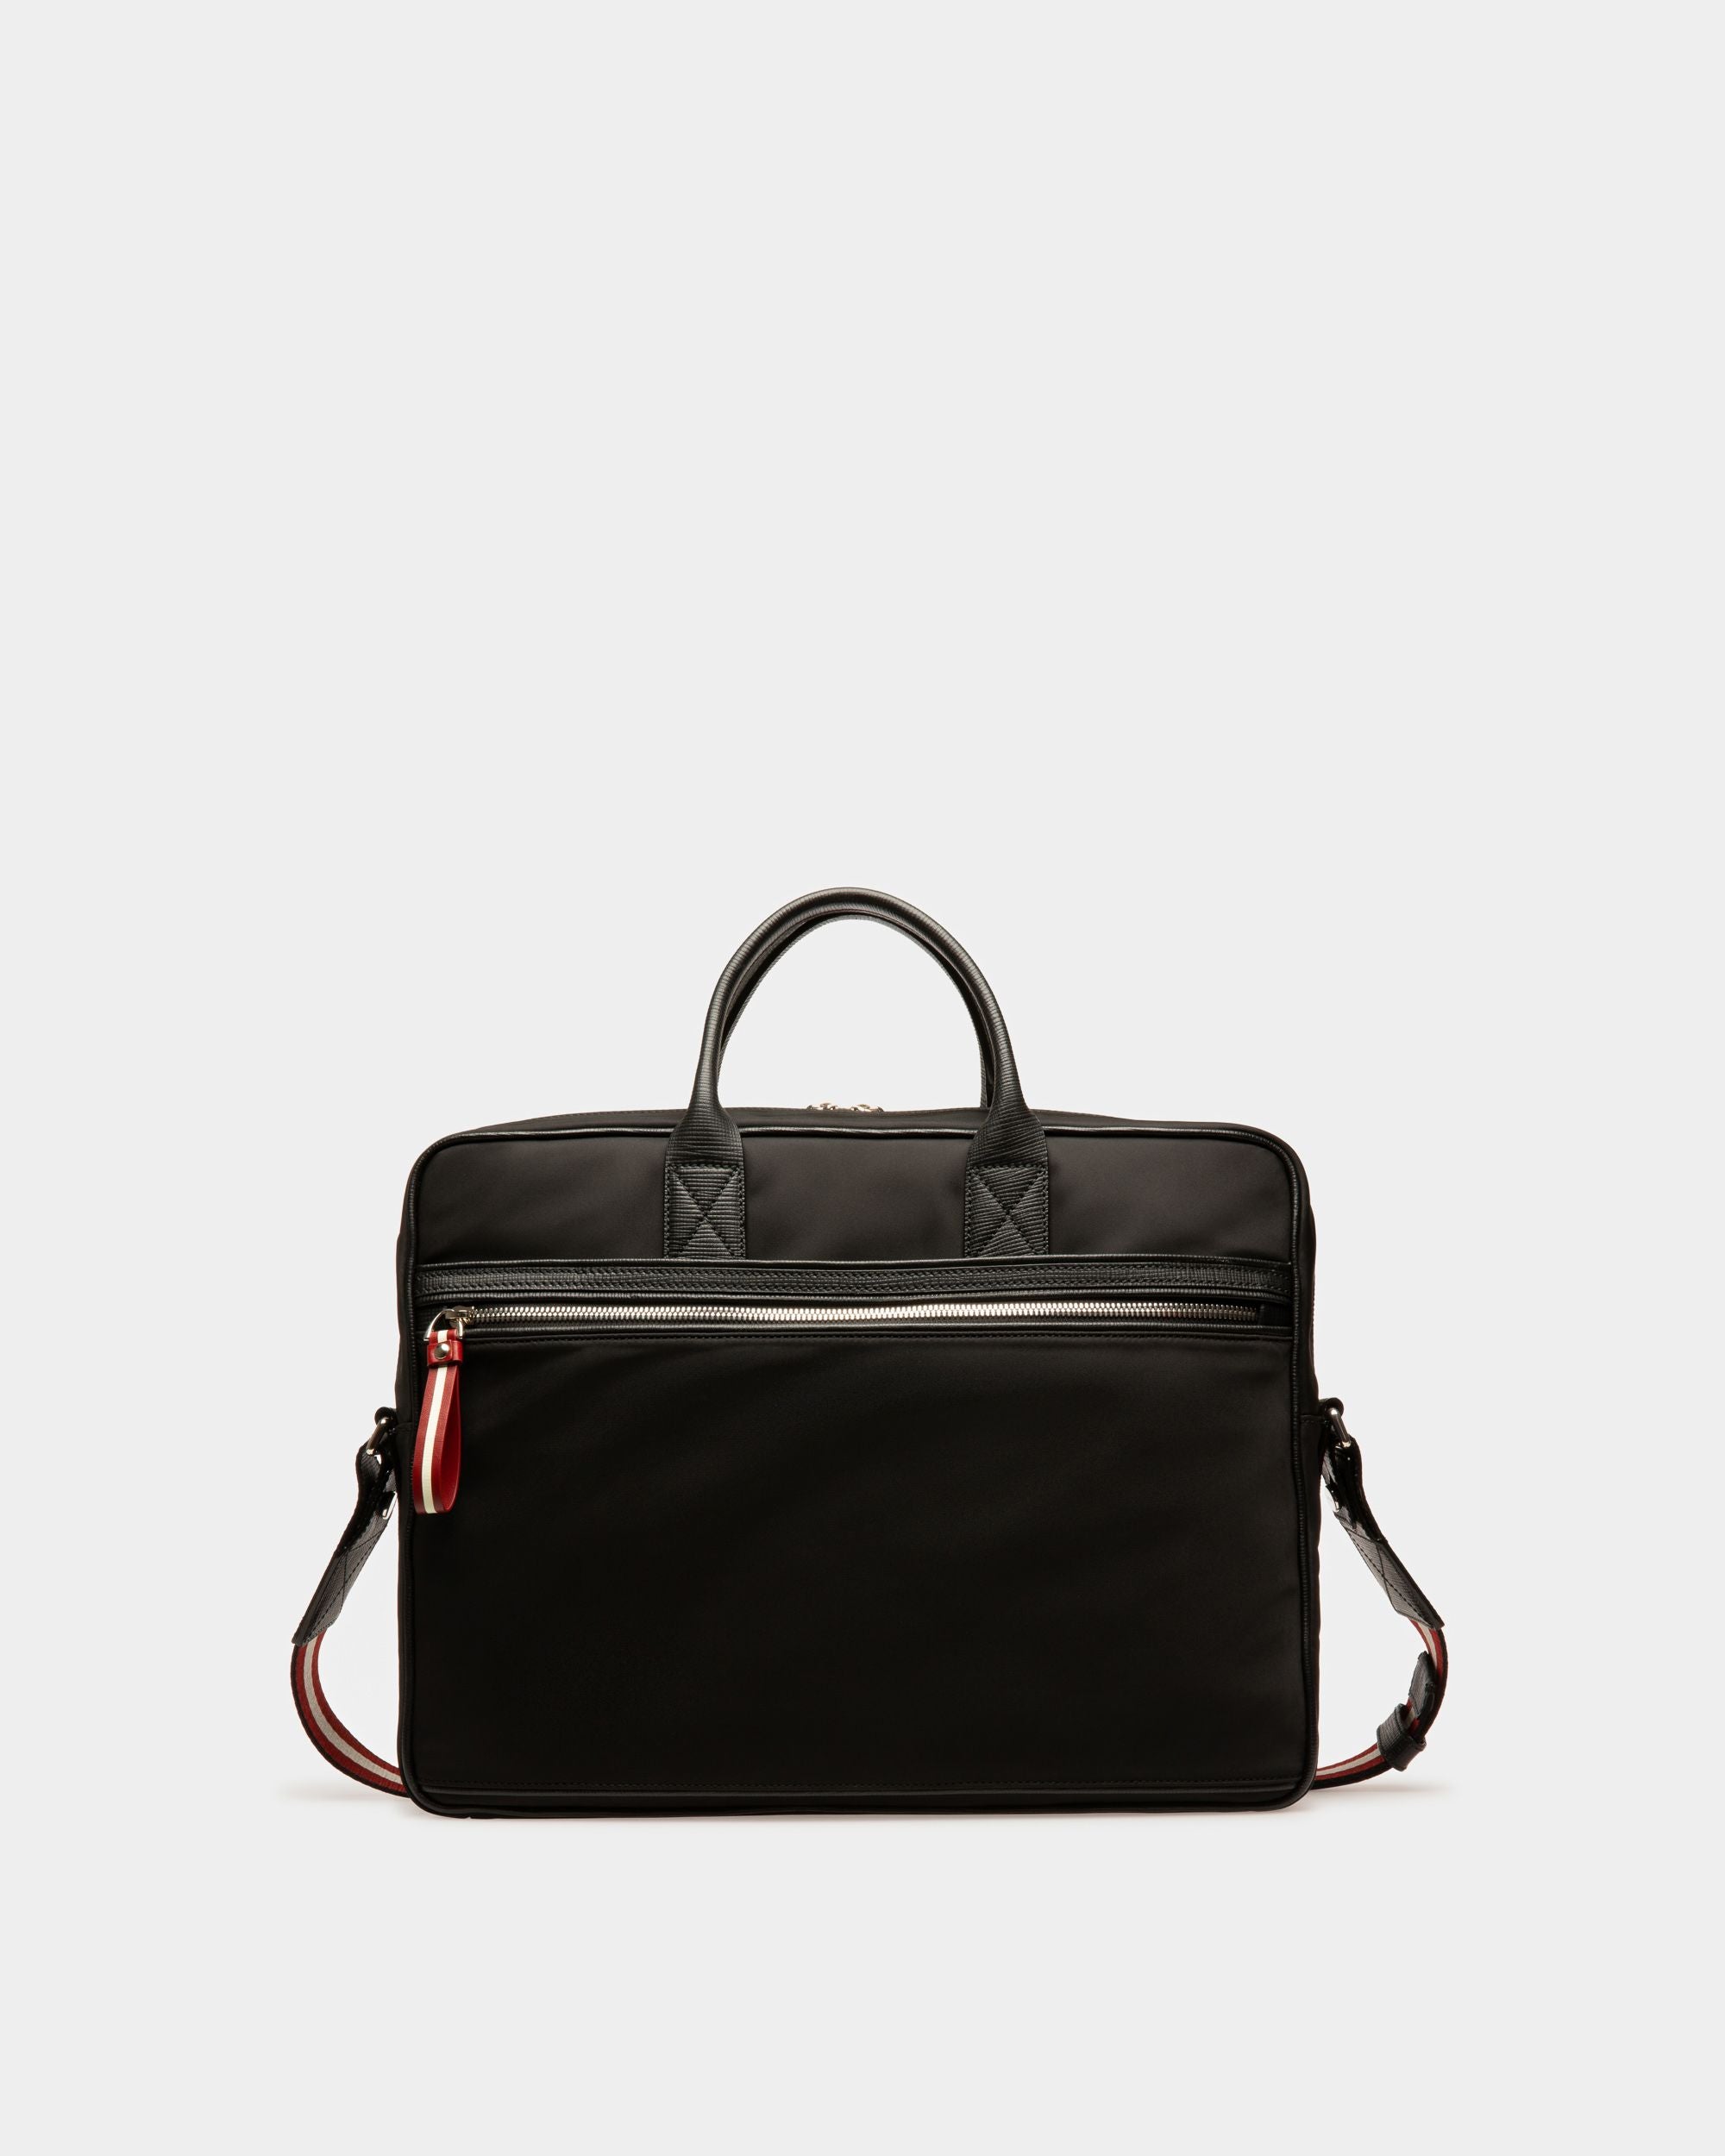 Faldy | Men's Business Bag | Black Leather | Bally | Still Life Back